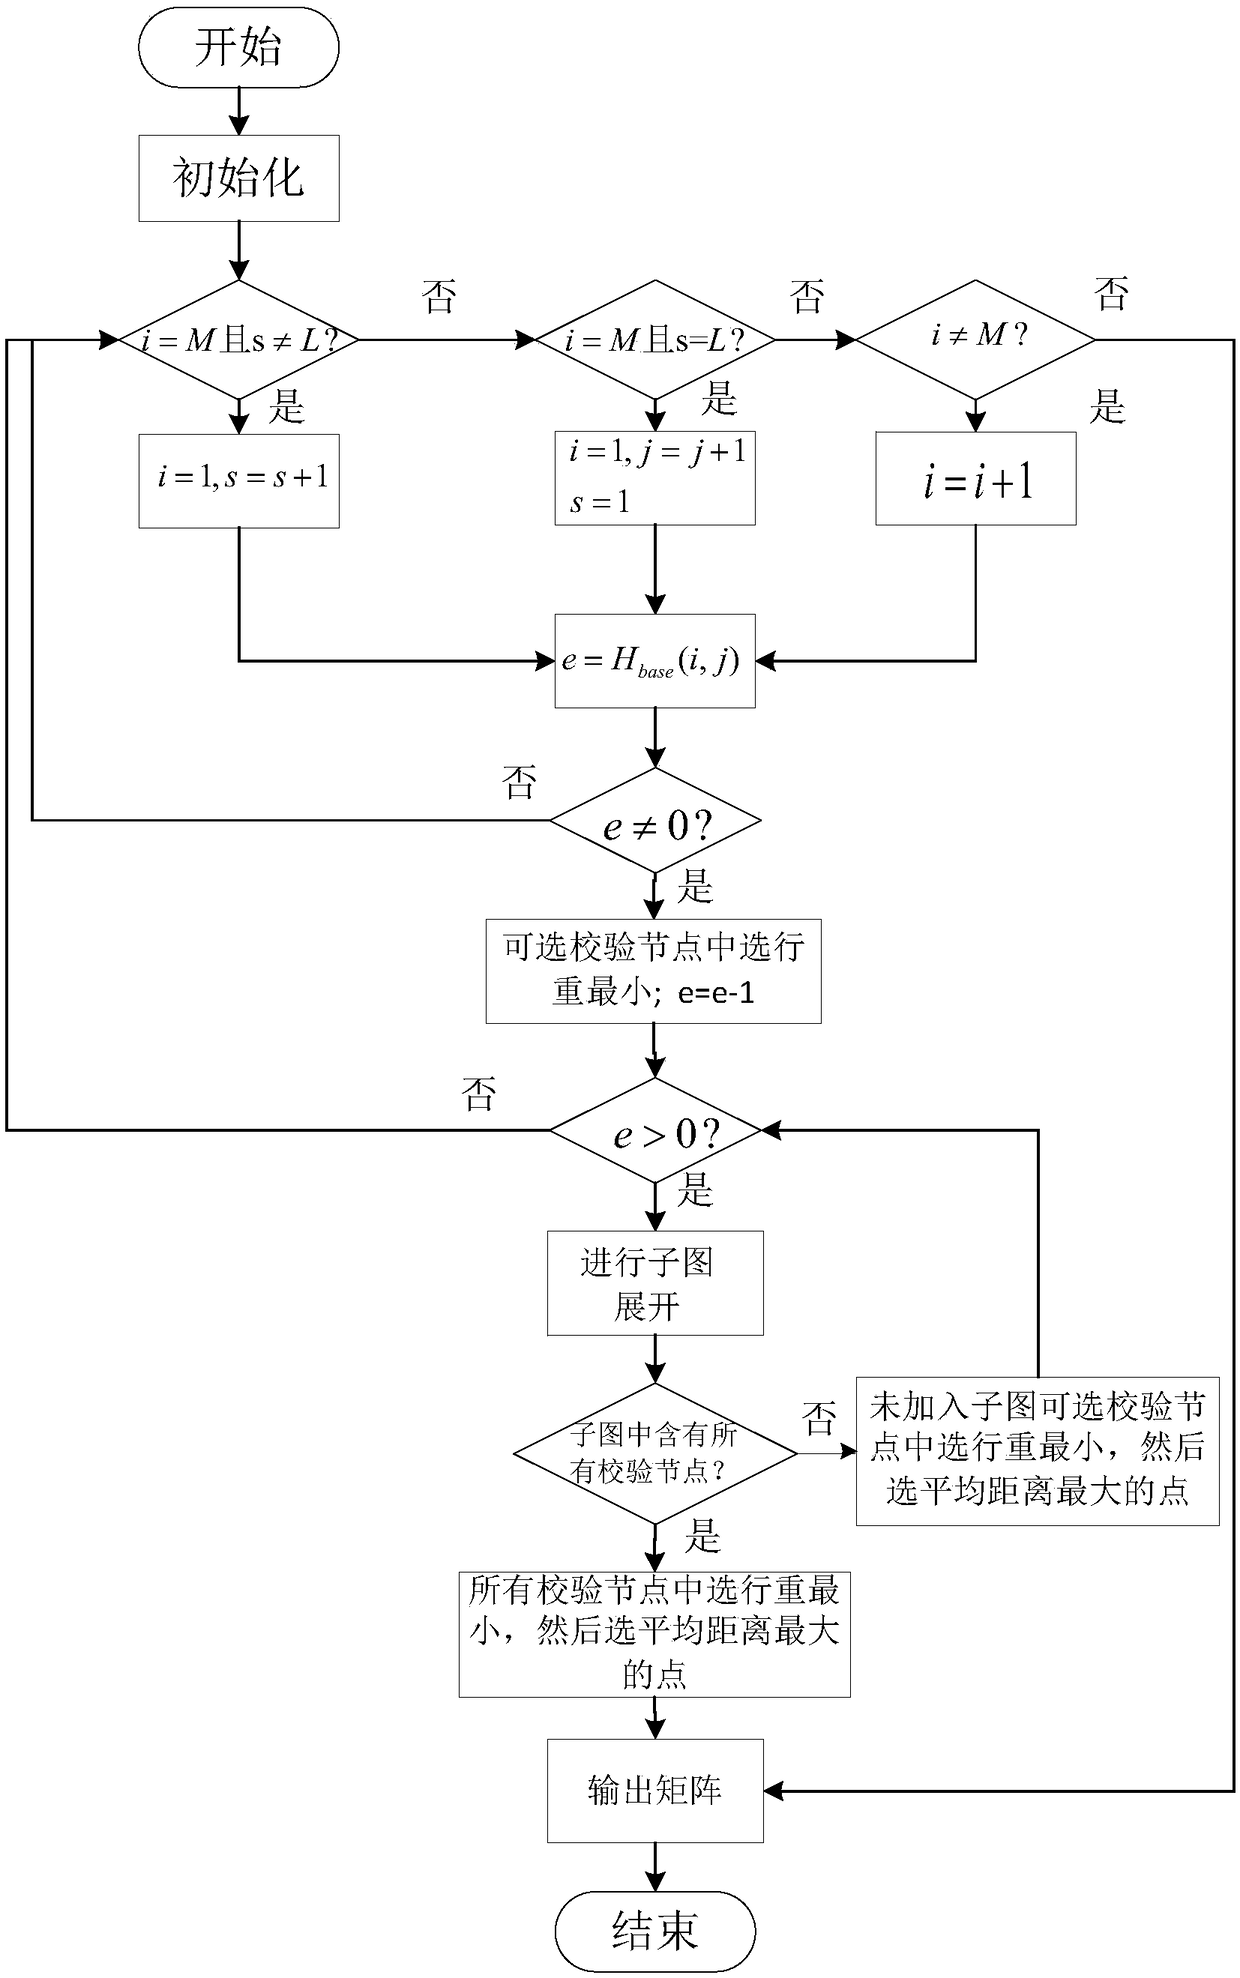 A design method of an original mode diagram LDPC code